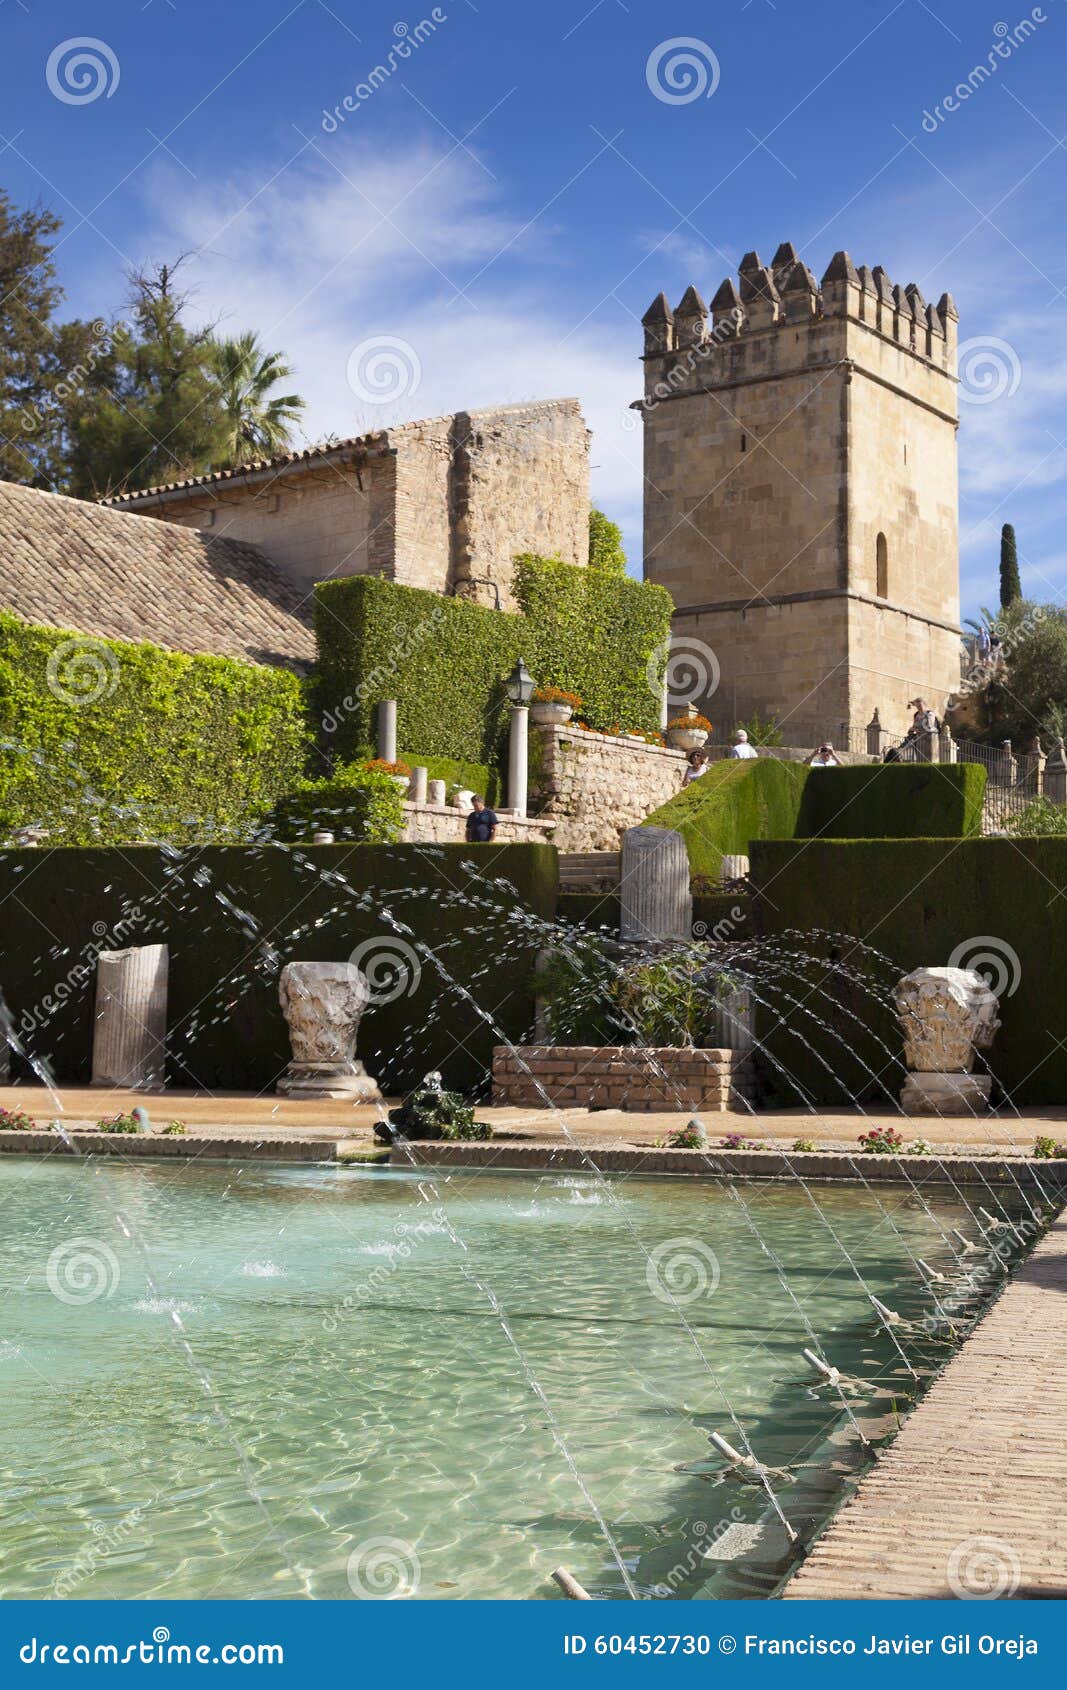 gardens and fountains of the alcazar de los reyes catÃÂ³licos